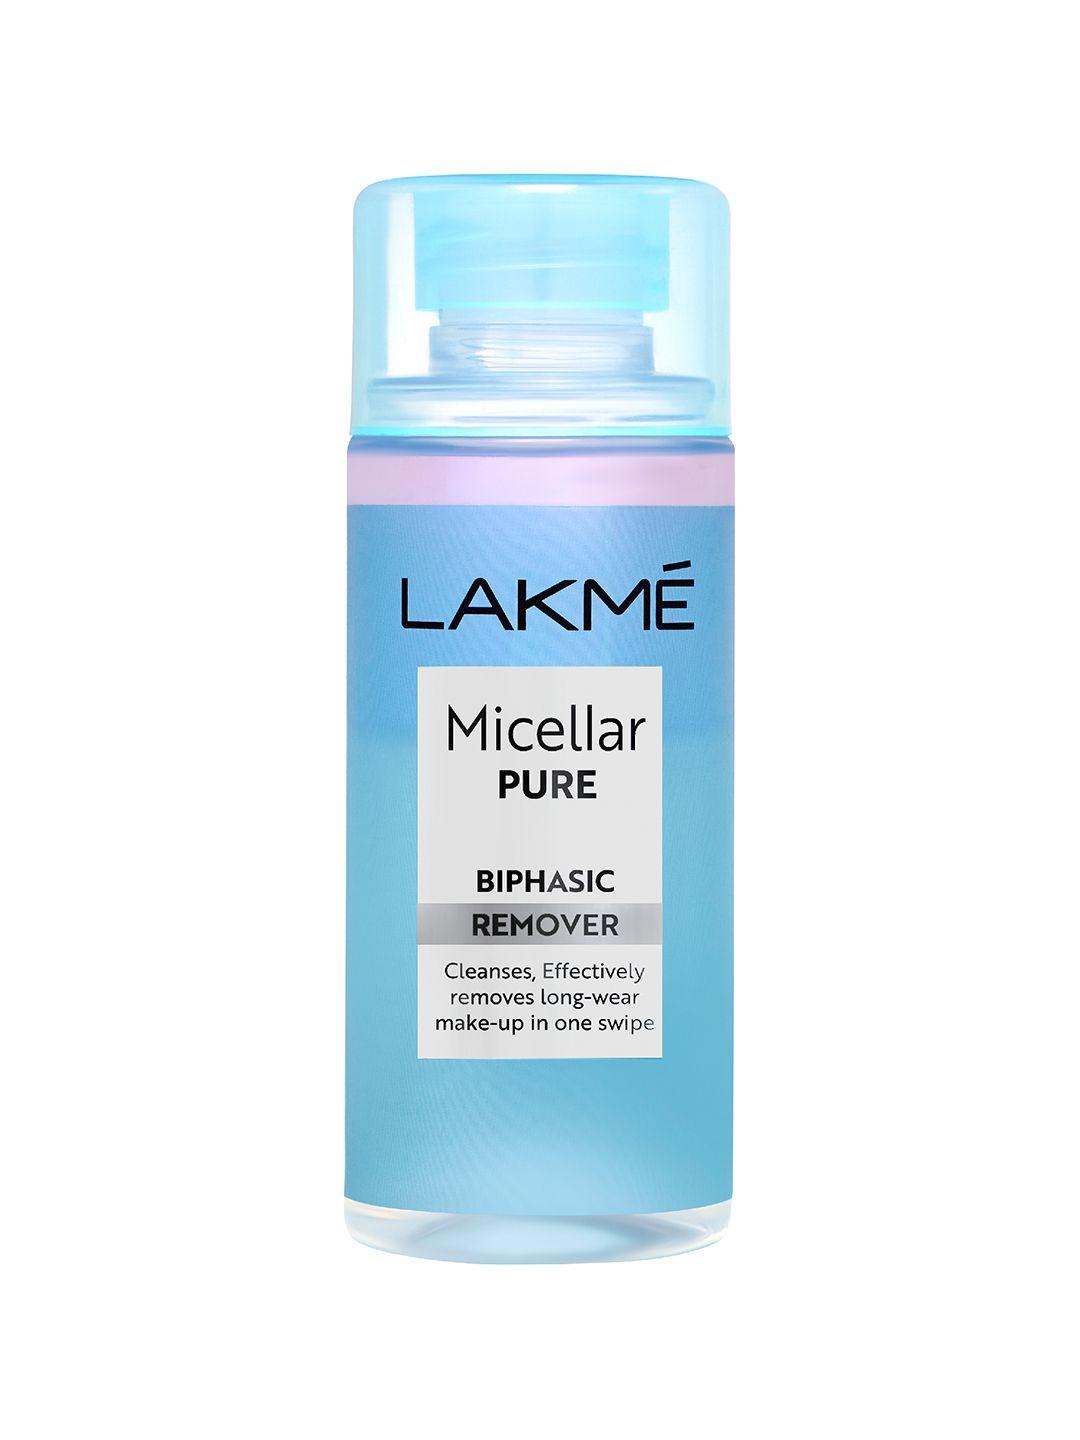 lakme pure micellar bi-phasic makeup remover - 100 ml